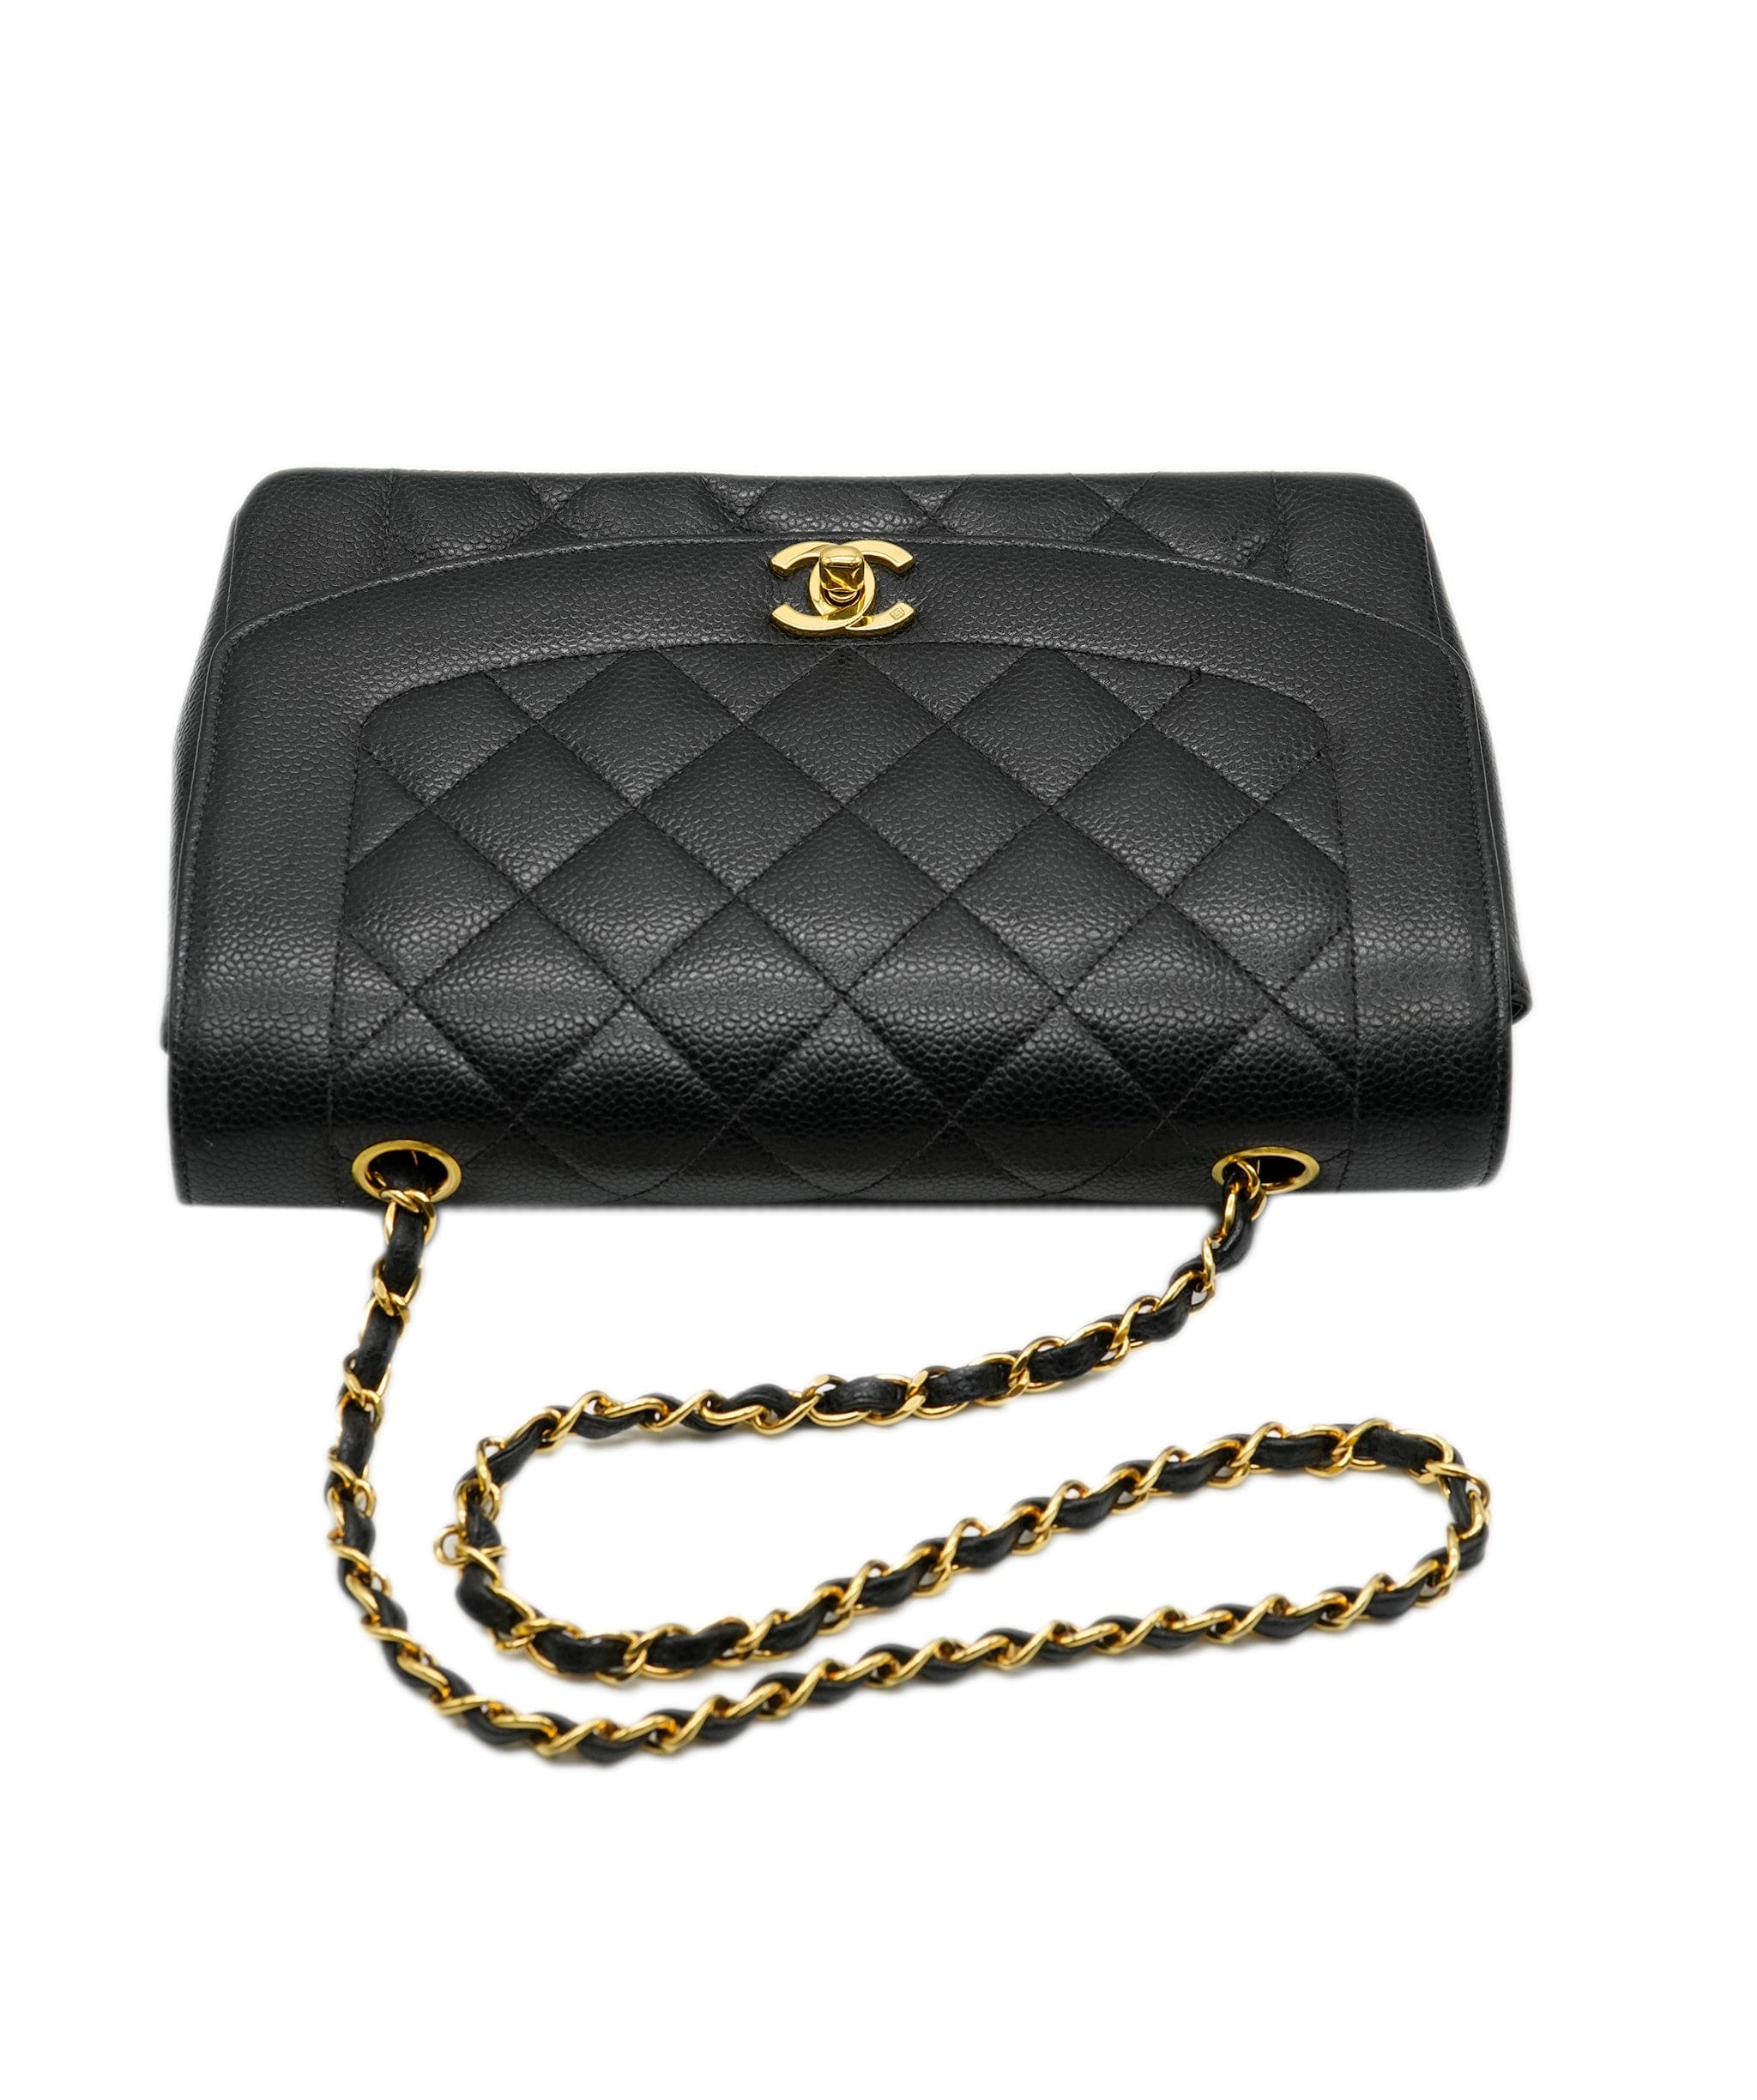 Chanel Chanel Diana 25 Caviar Black 90177855 UKL1209